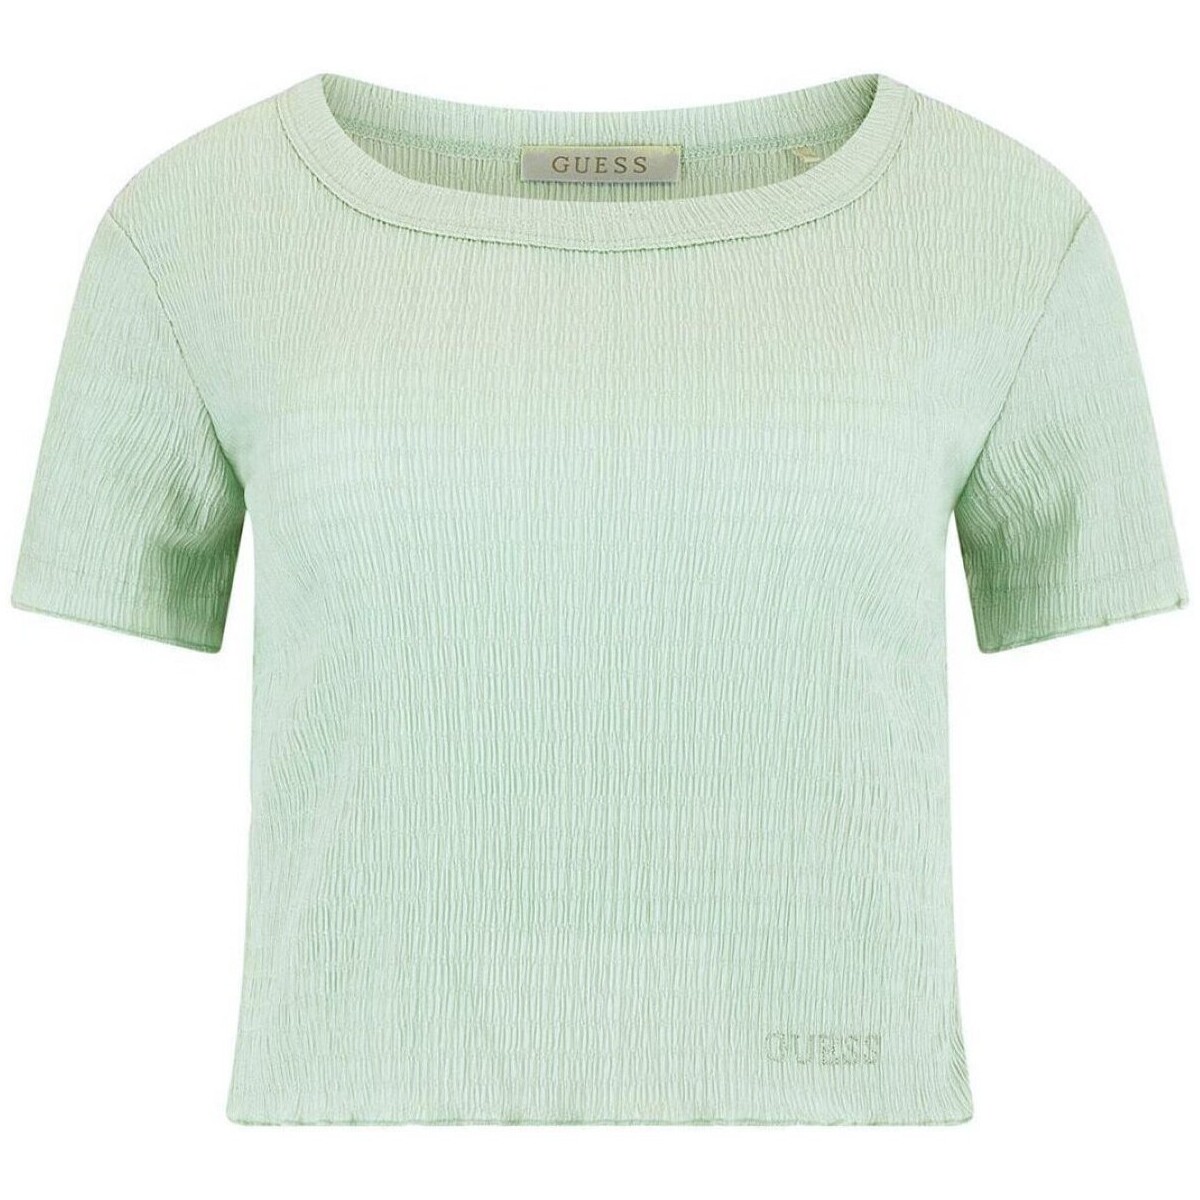 textil Tops y Camisetas Guess W3GP34 KBQI0 - Mujer Verde